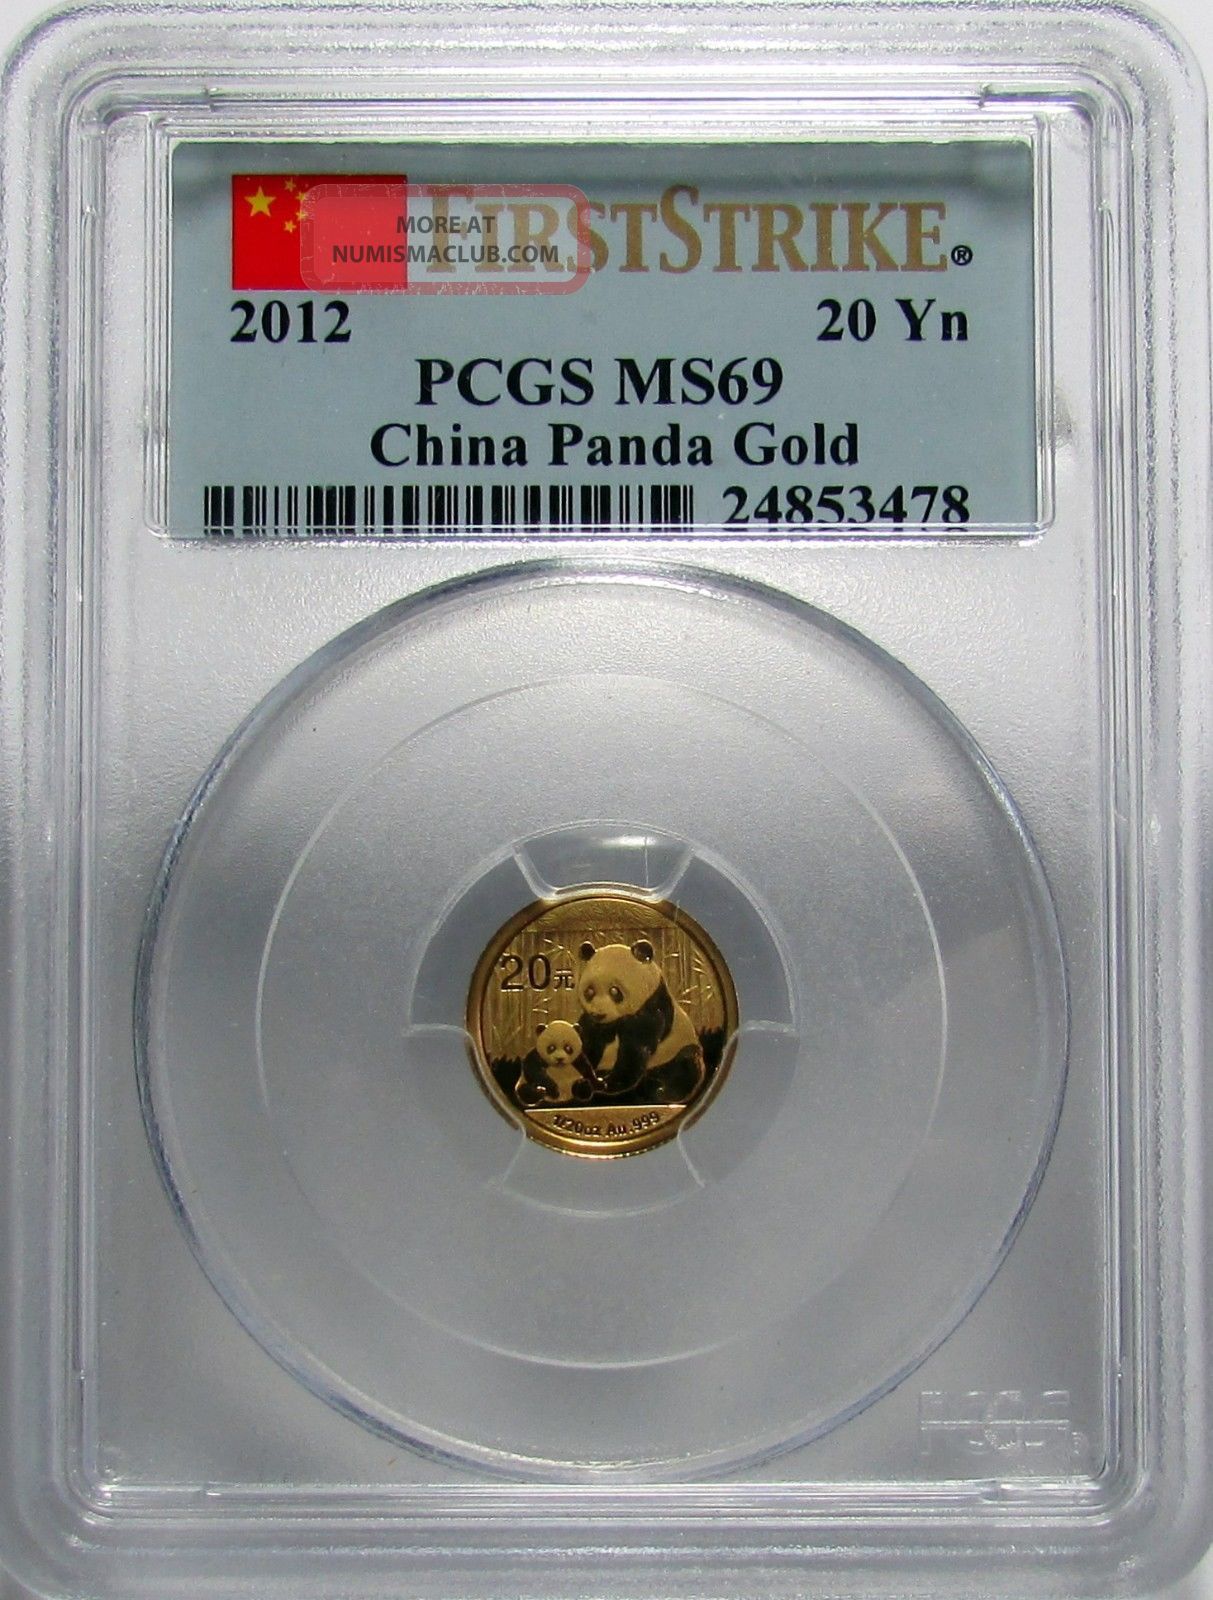 2012 First Strike Pcgs Ms 69 Gold China Panda 20 Yuan 20y 1/20 Oz